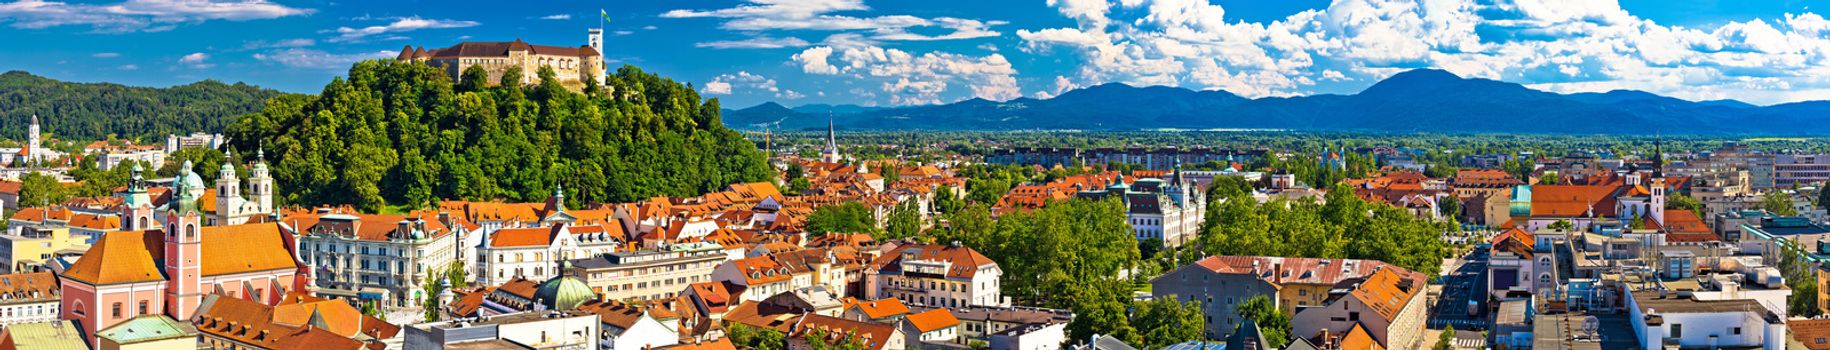 City of Ljubljana panoramic view, capital of Slovenia